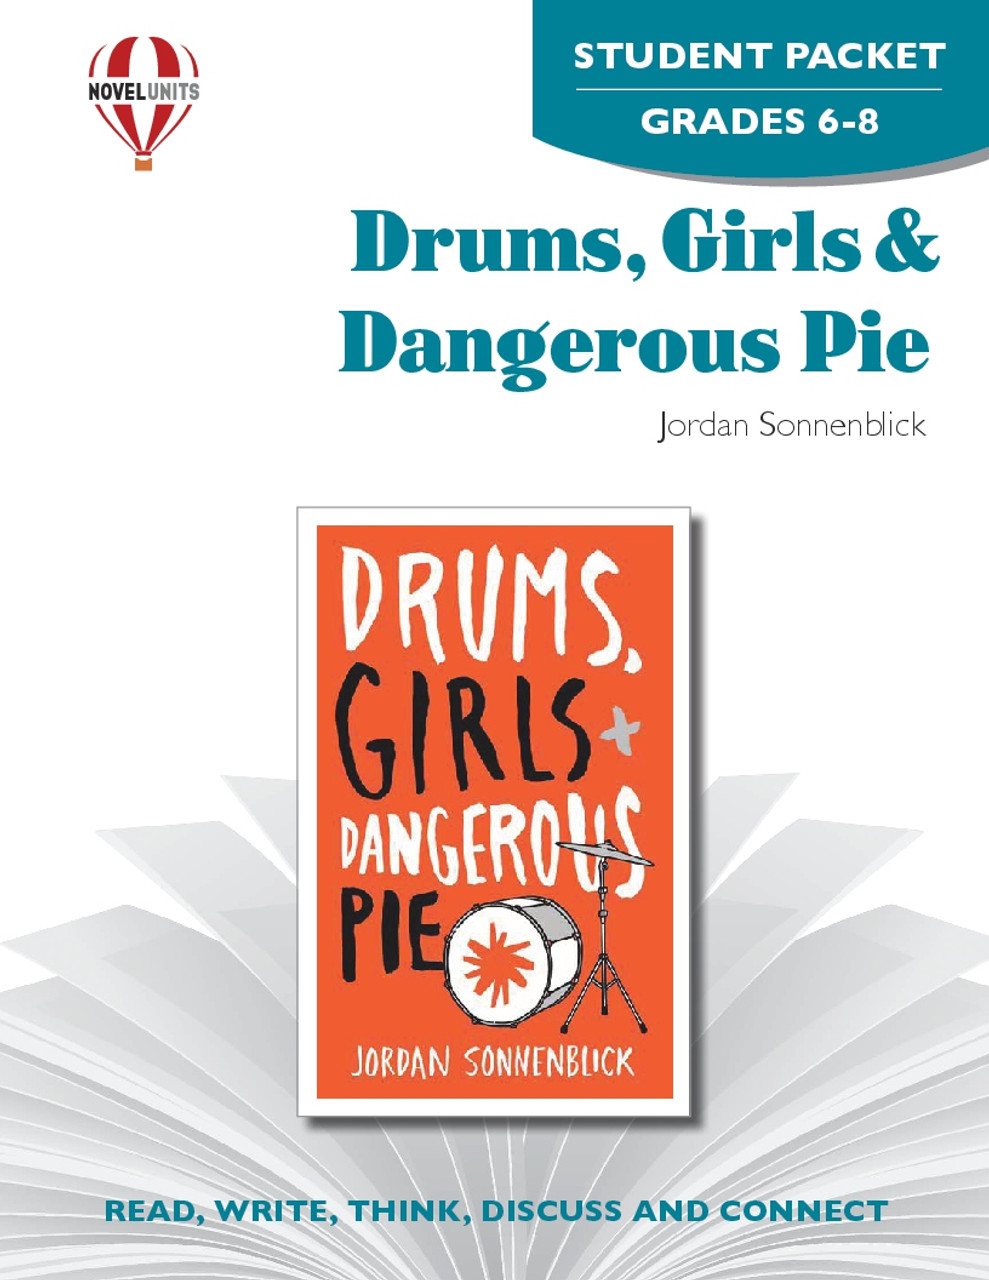 Pie　Novel　Student　Unit　Girls　Drums,　Dangerous　and　Packet